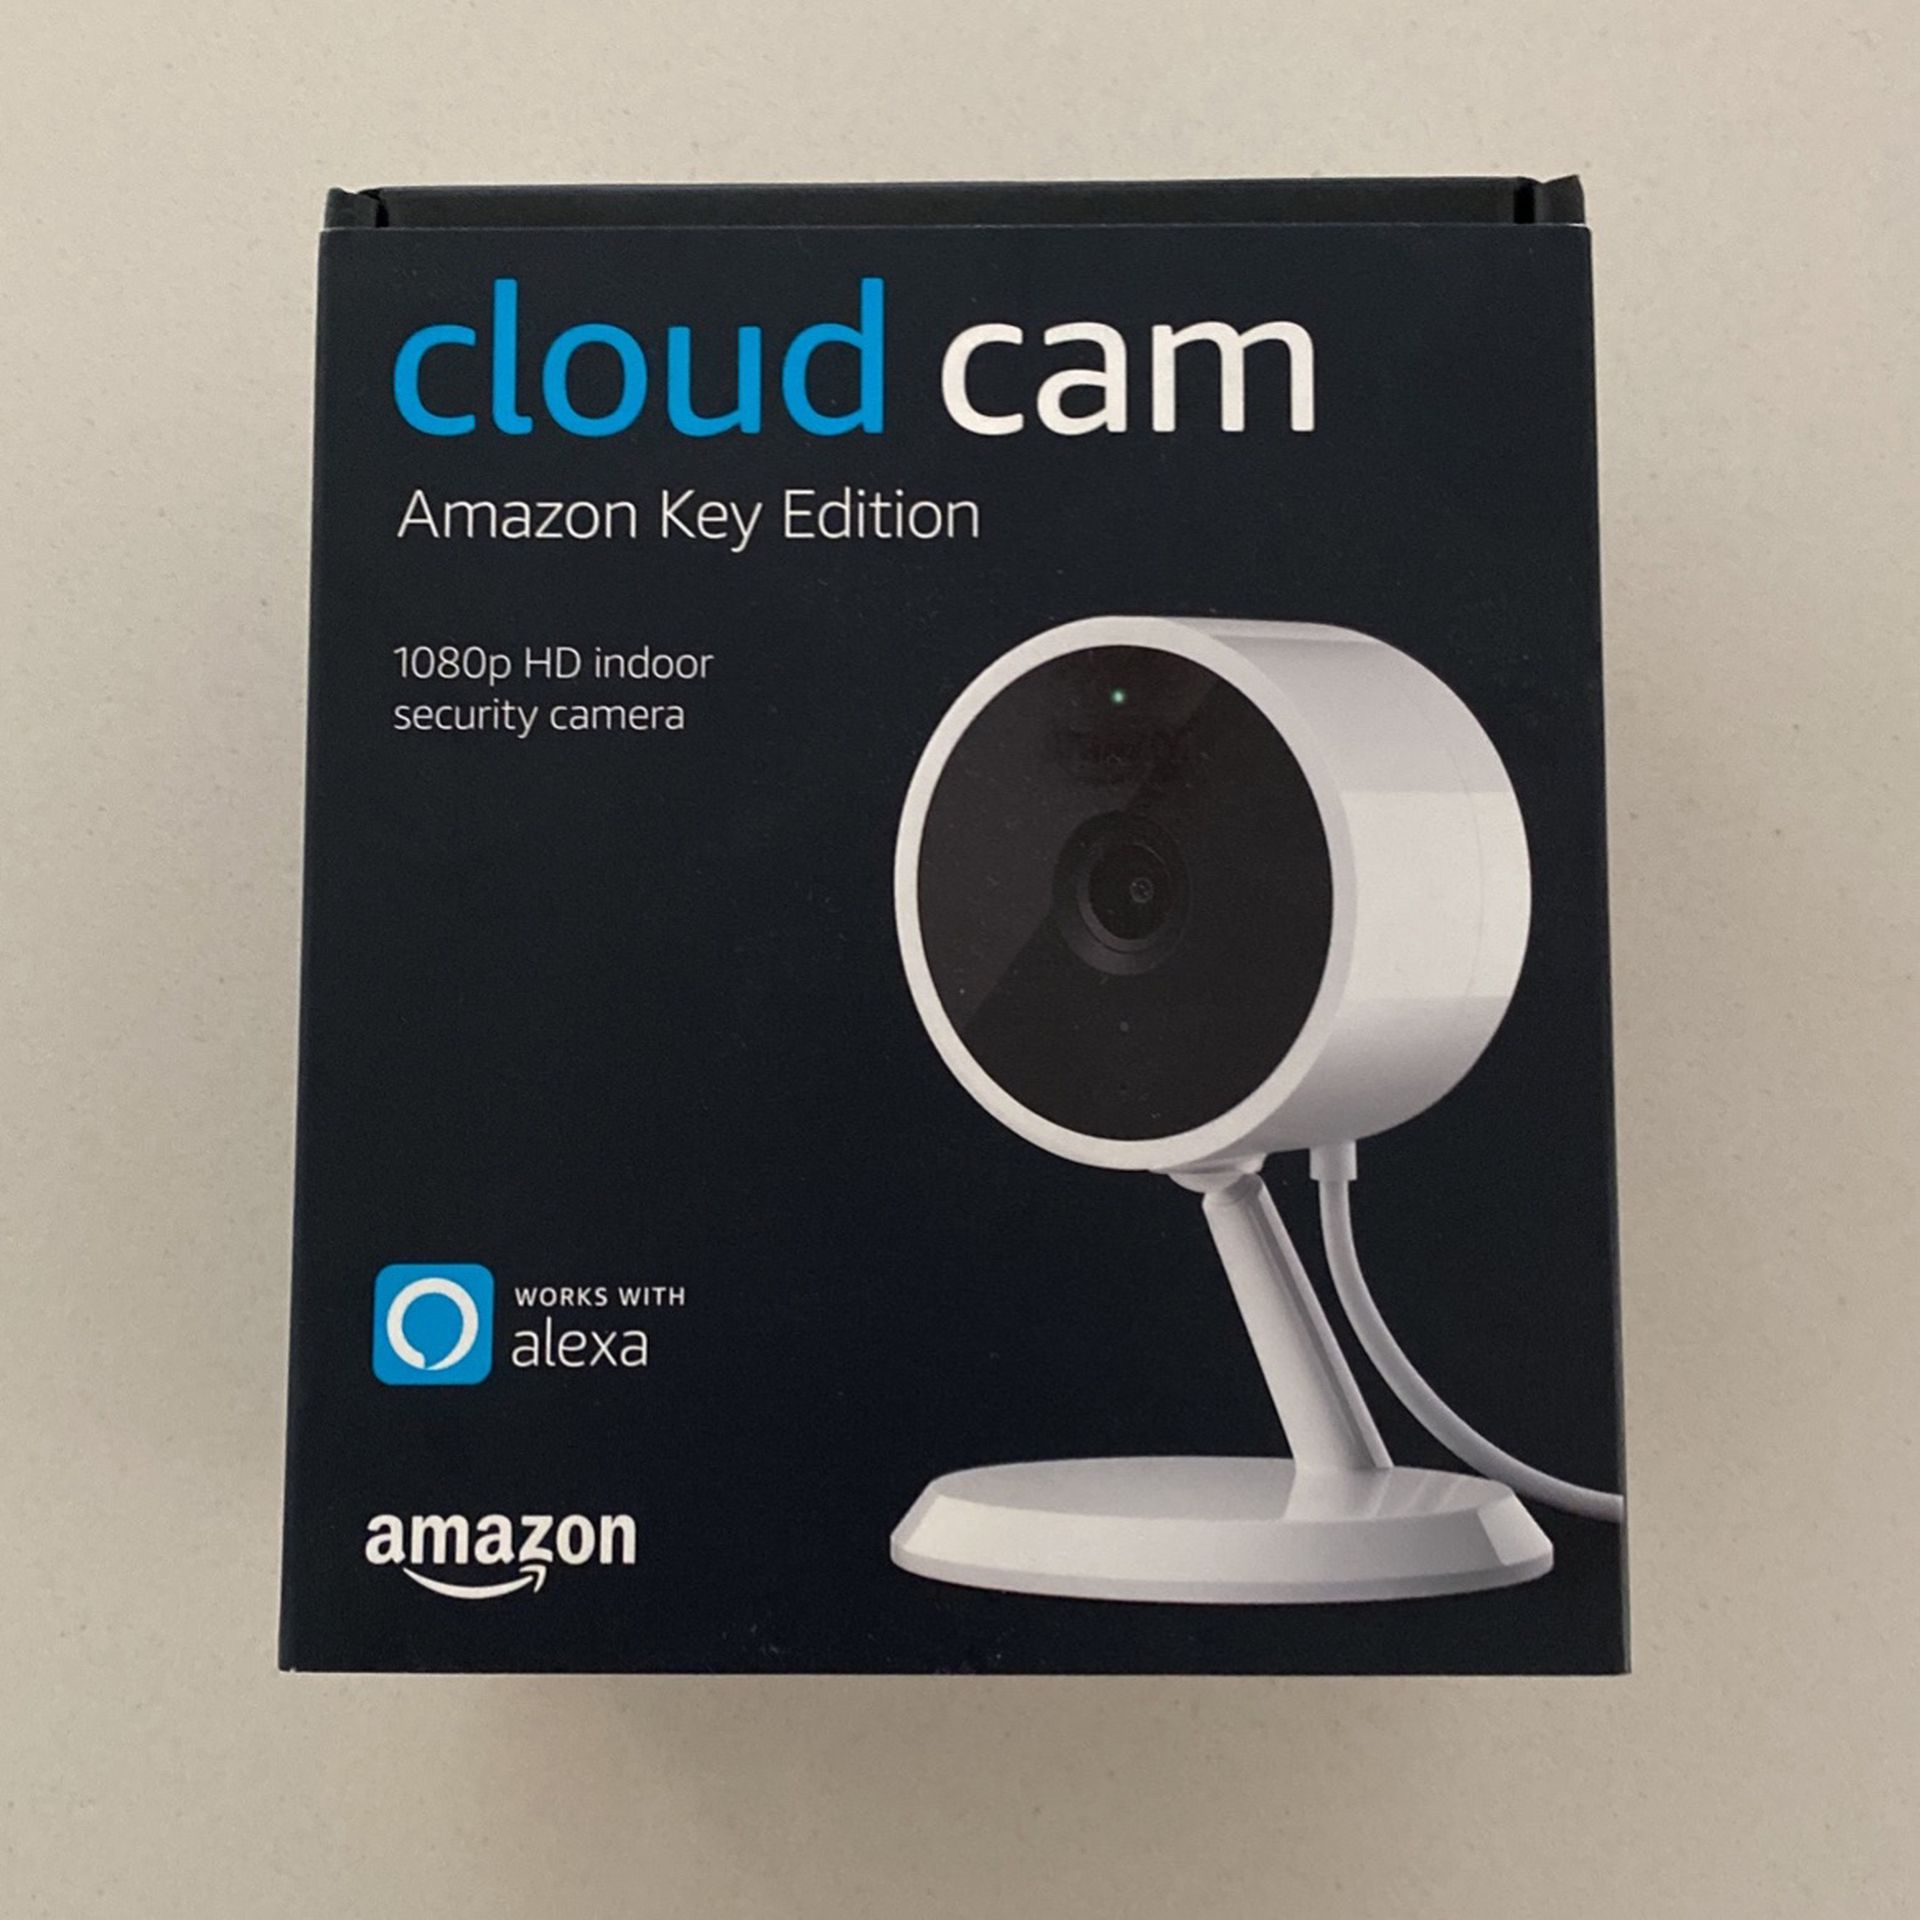 New Amazon Cloud Cam - Amazon Key Edition